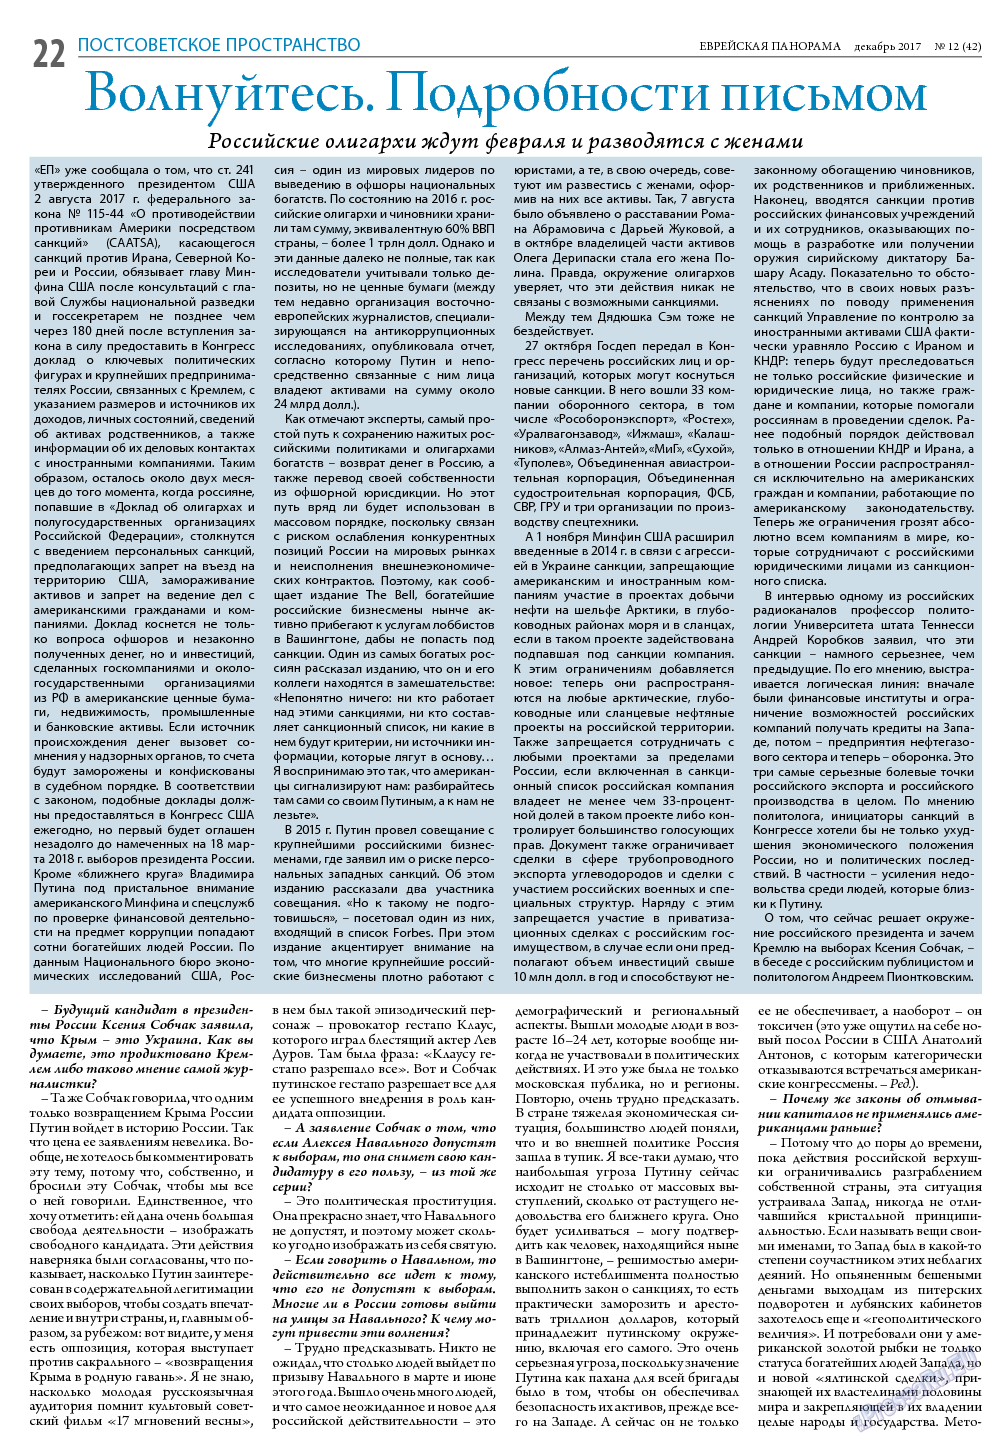 Еврейская панорама, газета. 2017 №12 стр.22